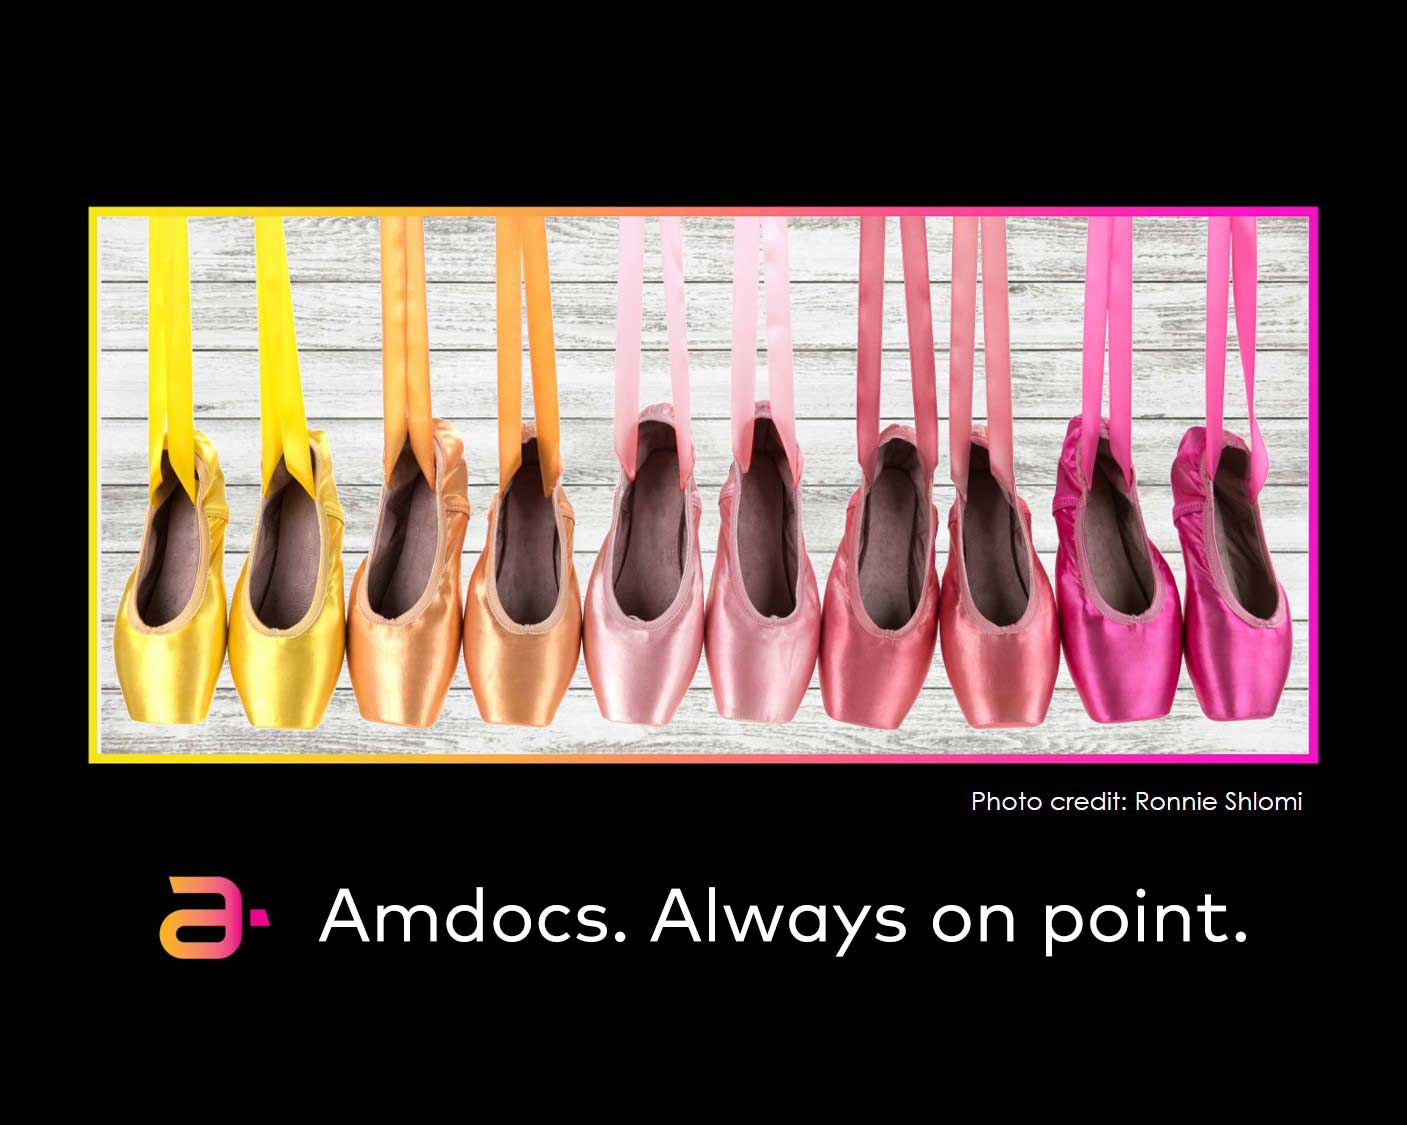 amdocs ballet shoes graphic